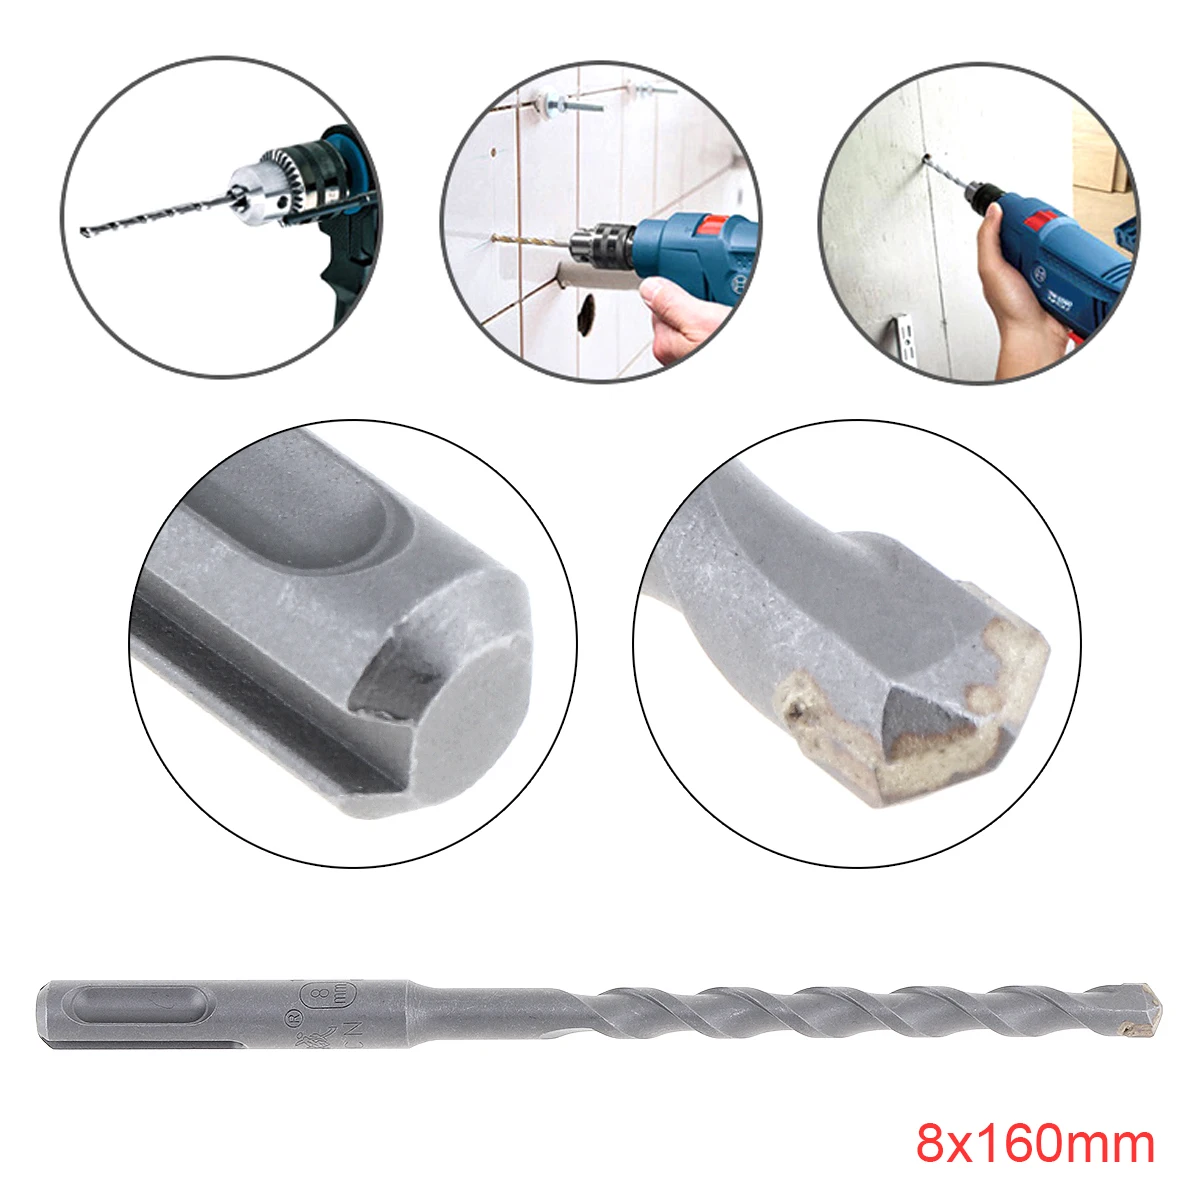 

8x160mm Twist Drill Bit Round Shank Rotary Hammer Concrete Masonry Drill Bit for Electric Drills / Drilling Machines / Wood Dril